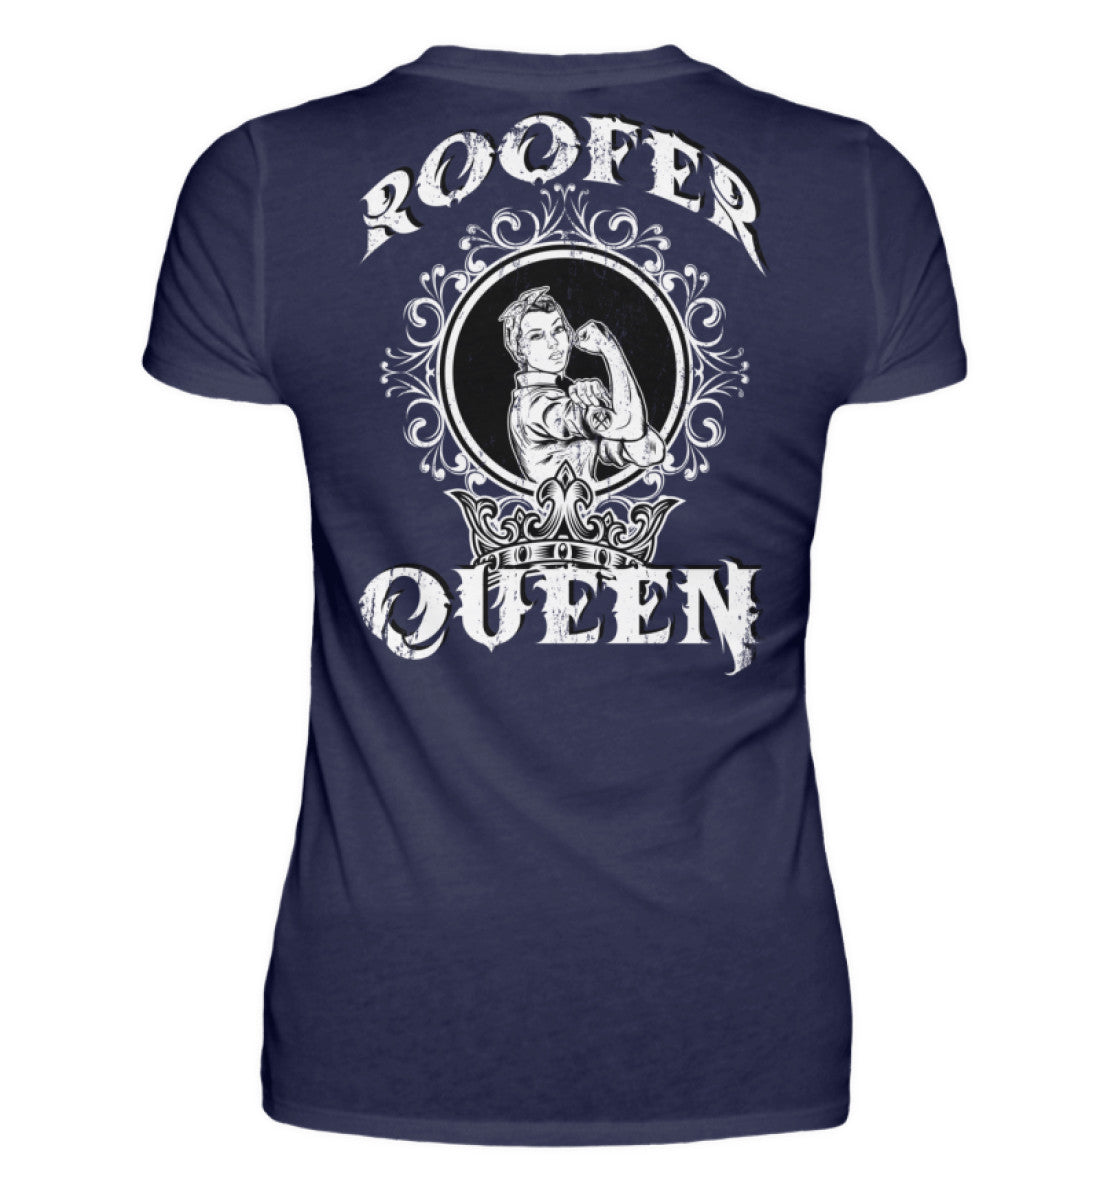 Roofer Queen Version 1.0 - V-Neck Damenshirt €29.95 Rooferking